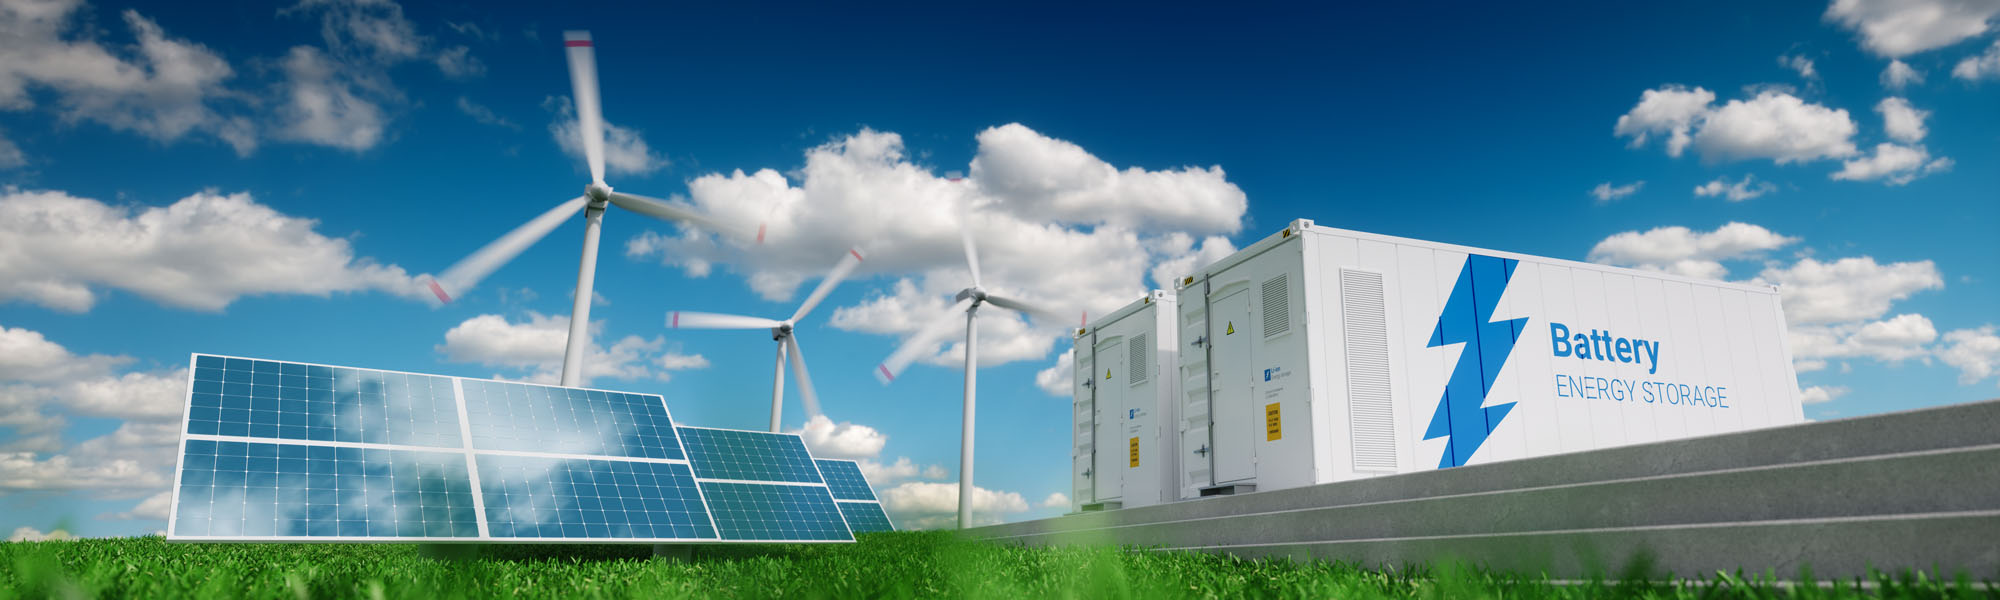 Solar, wind, and storage renewable energy